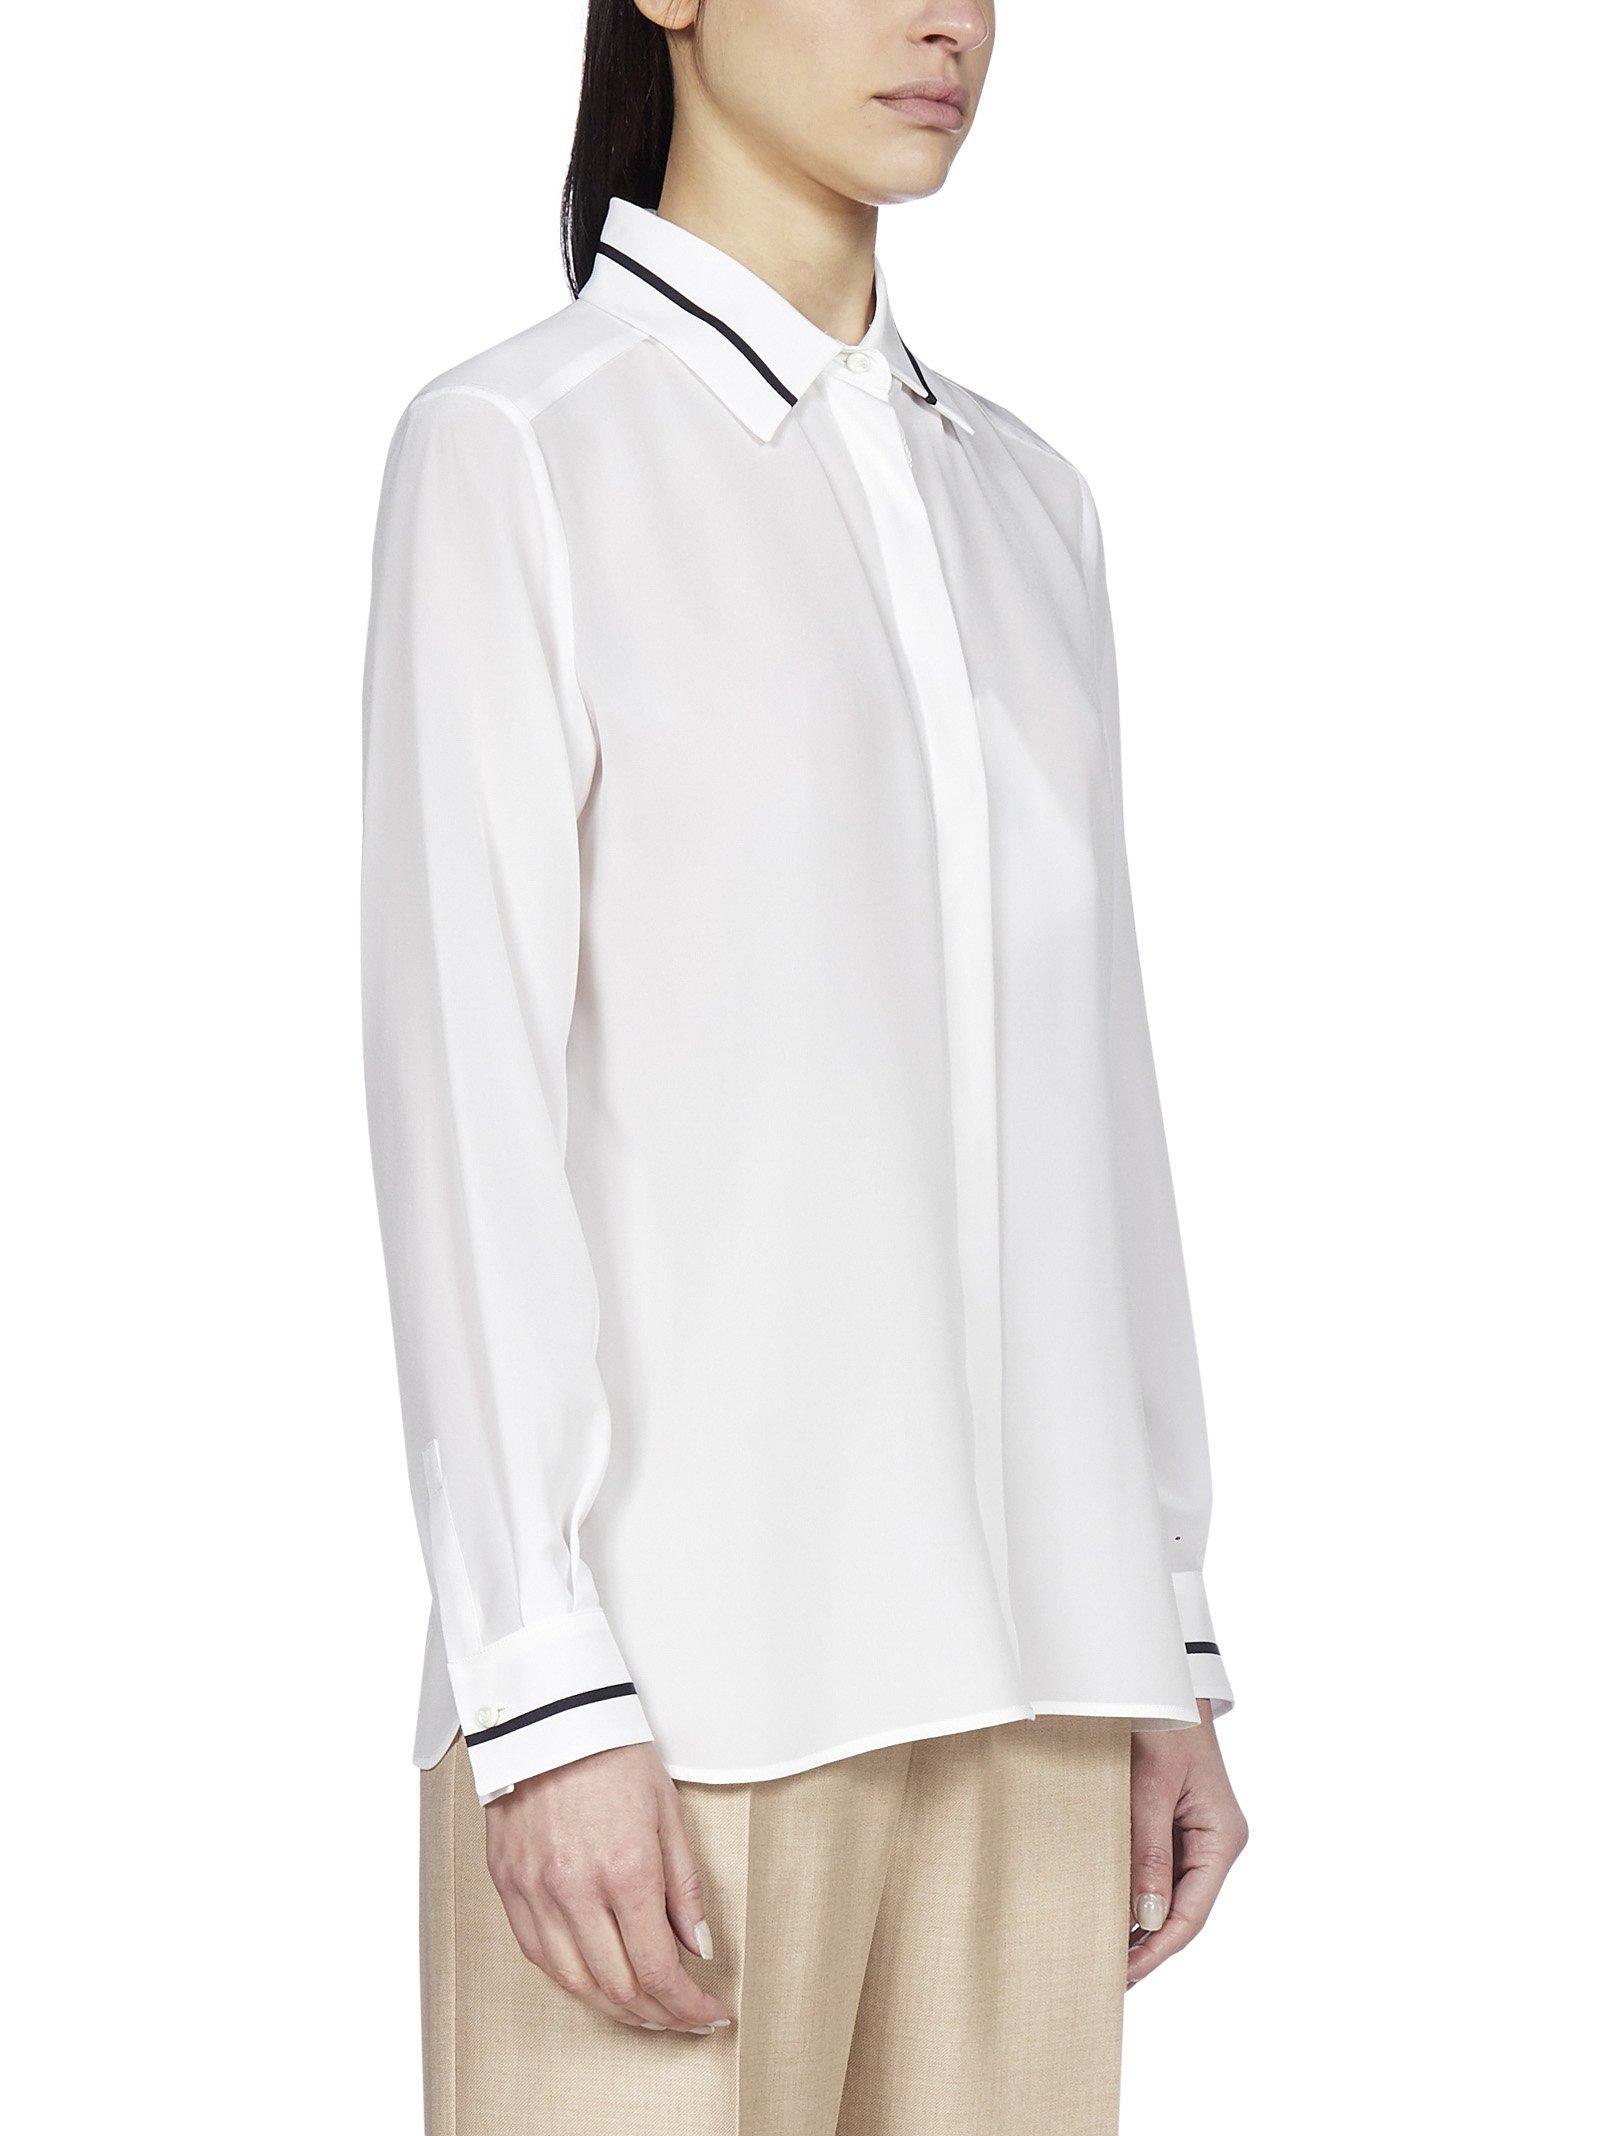 Max Mara Silk Contrasting Stripe Shirt in White - Lyst